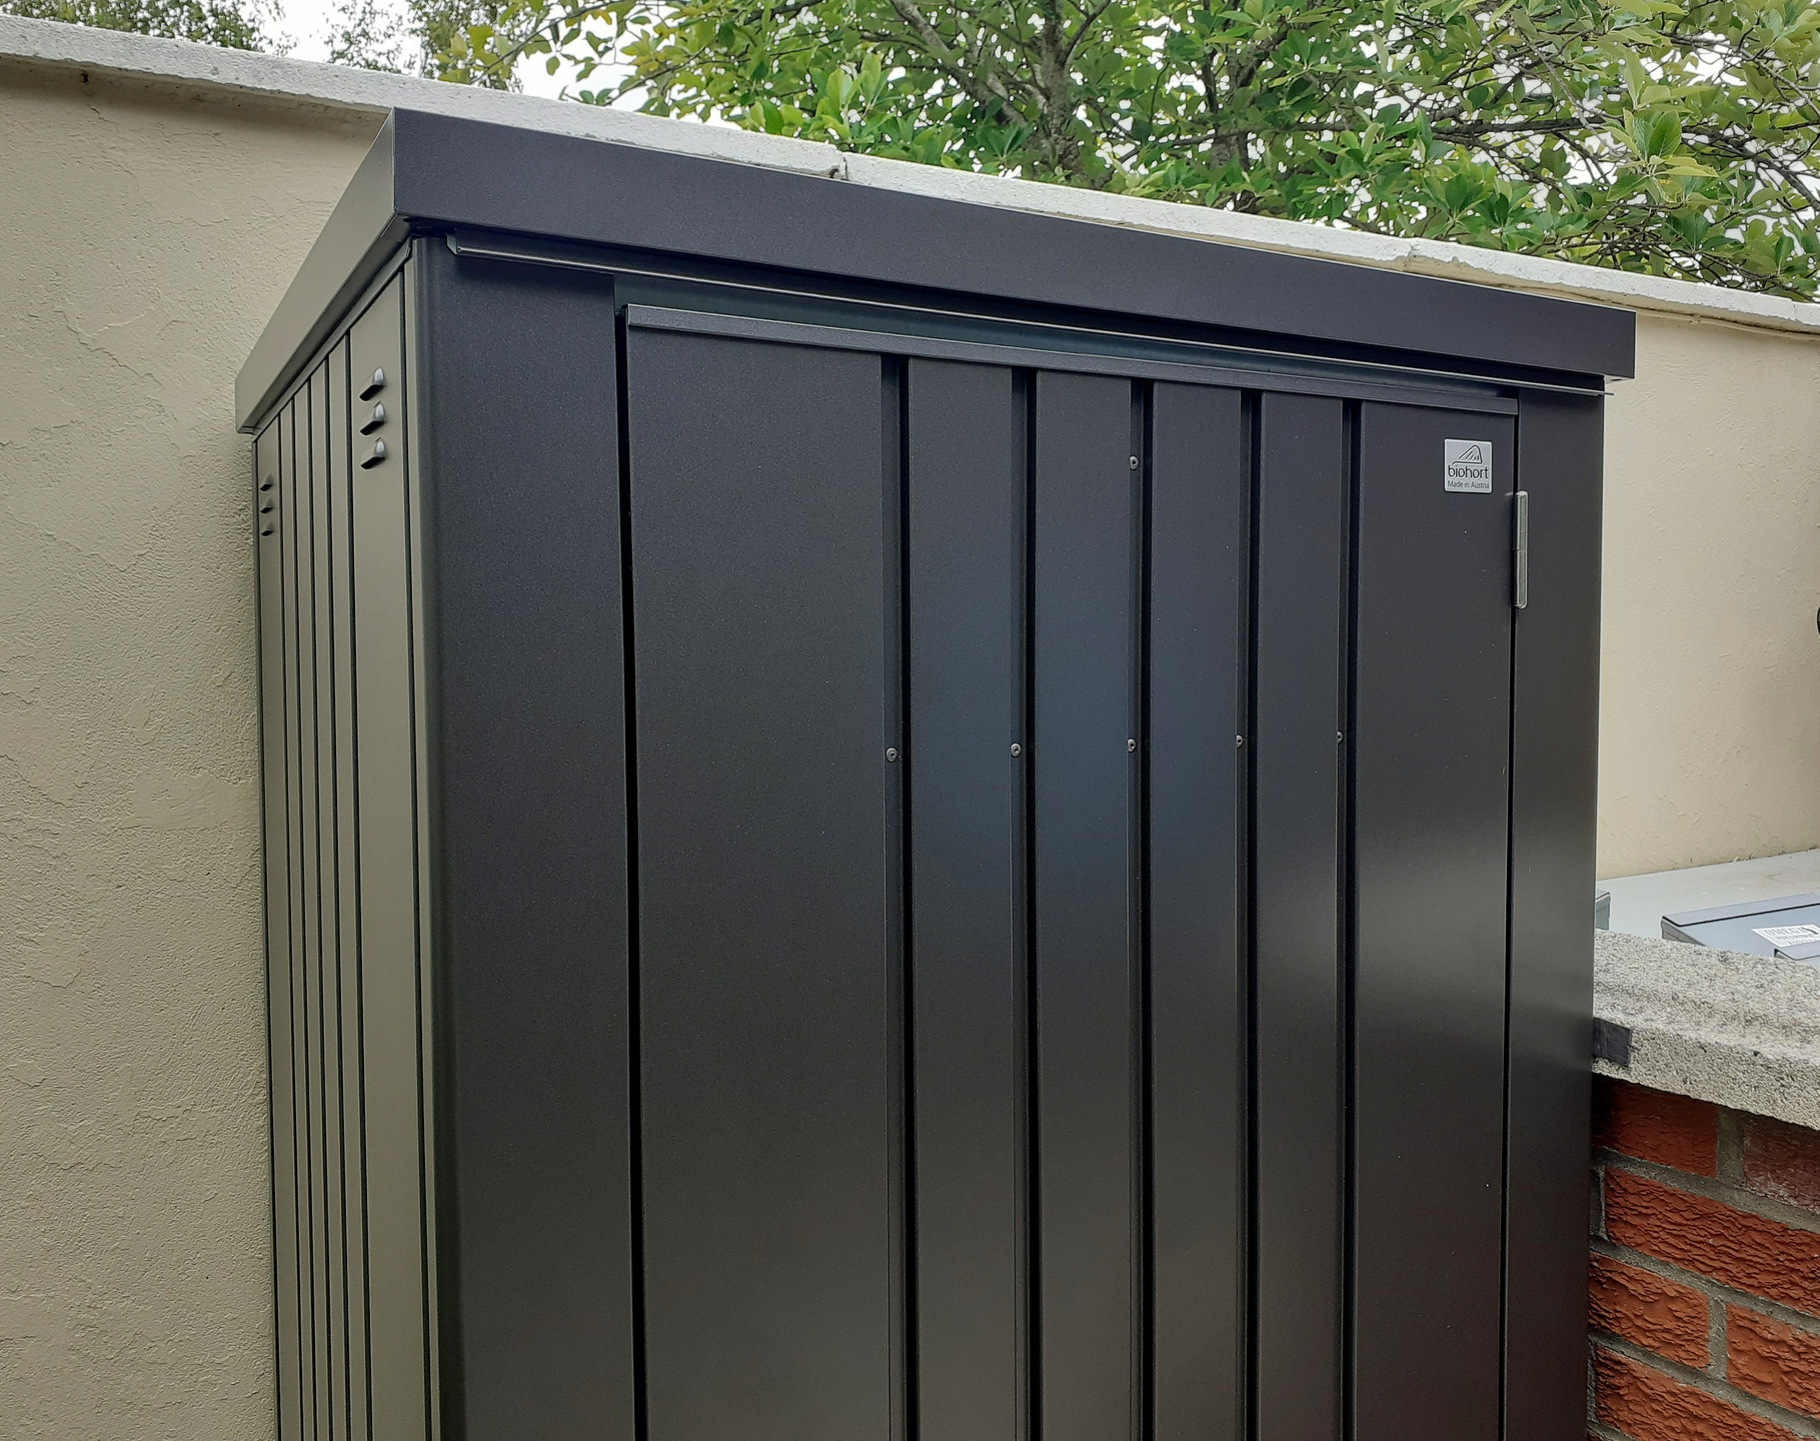 Biohort Equipment Locker 90 in metallic dark grey, supplied + fitted in Castleknock, Dublin 15 | Smart, Stylish, Rainproof Patio Storage Solutions